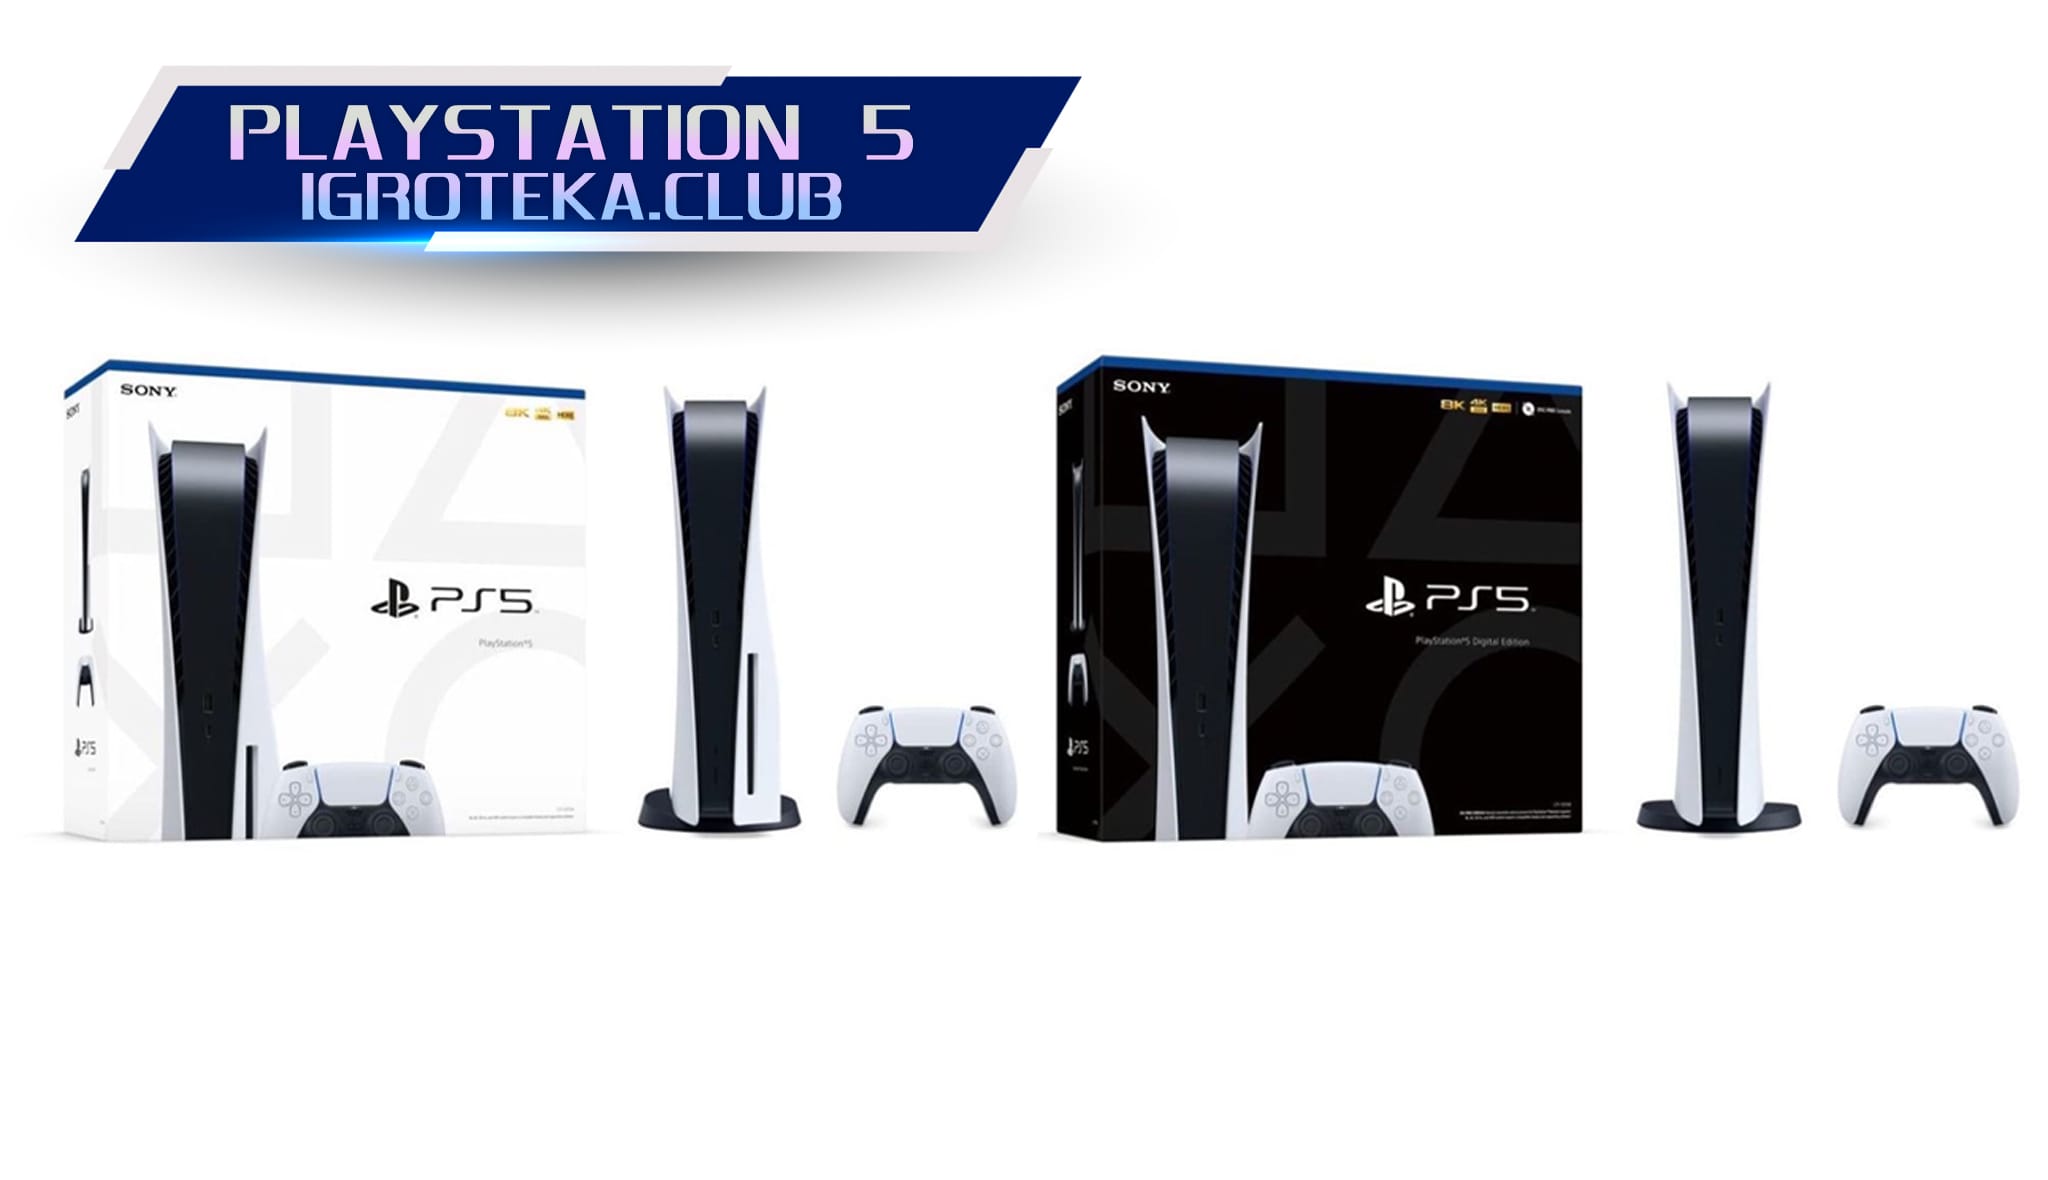 коробка игровой приставки PS5